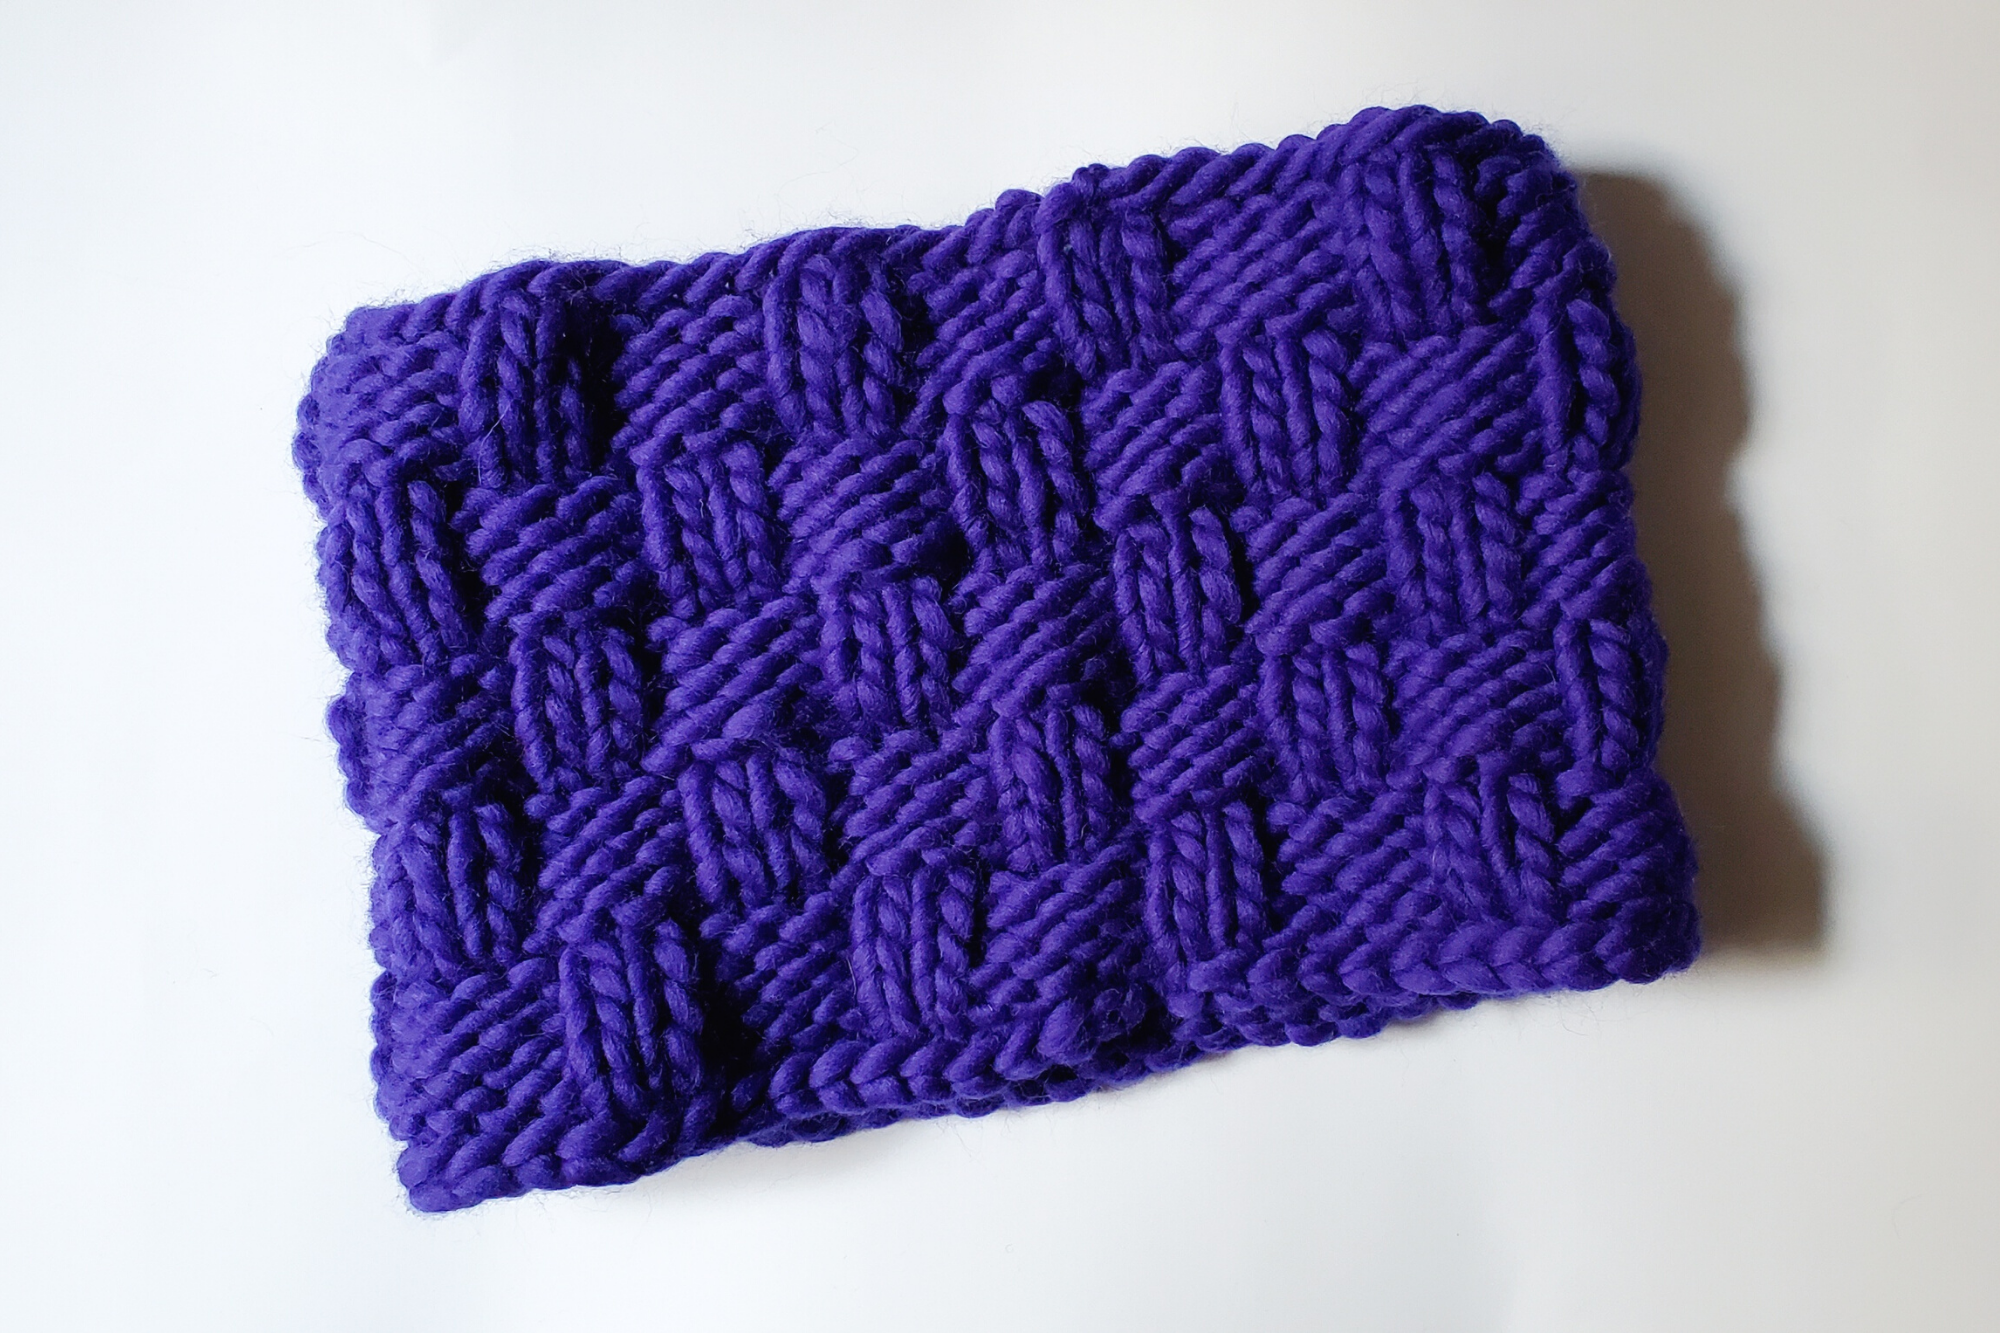 A purply-blue snood knit in a basketweave pattern